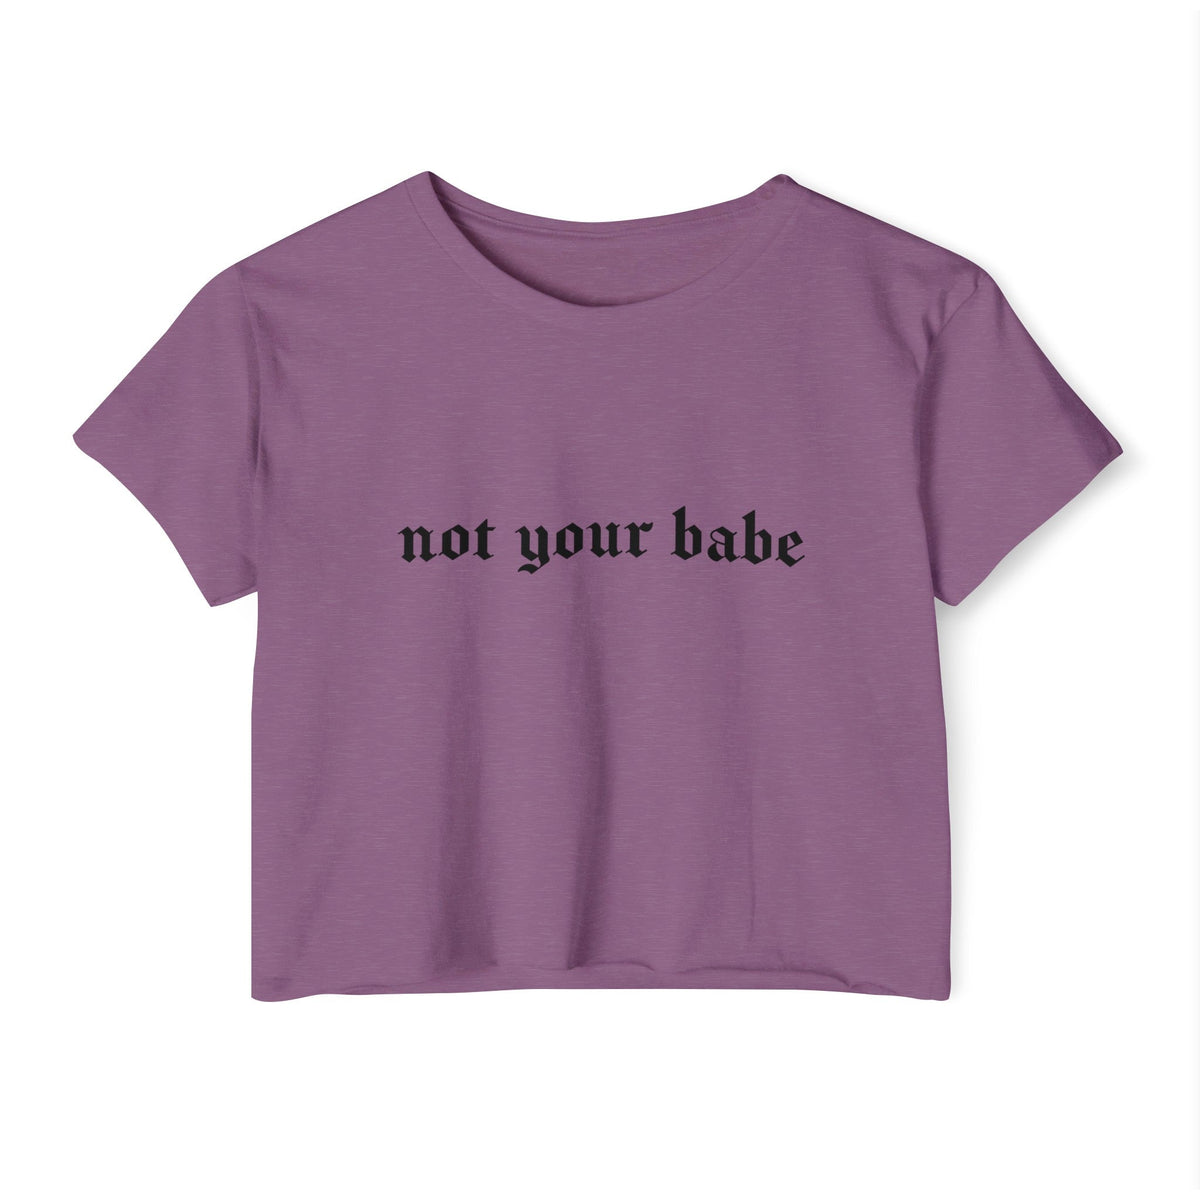 Not Your Babe Women's Lightweight Crop Top - Goth Cloth Co.T - Shirt14093888716157369668